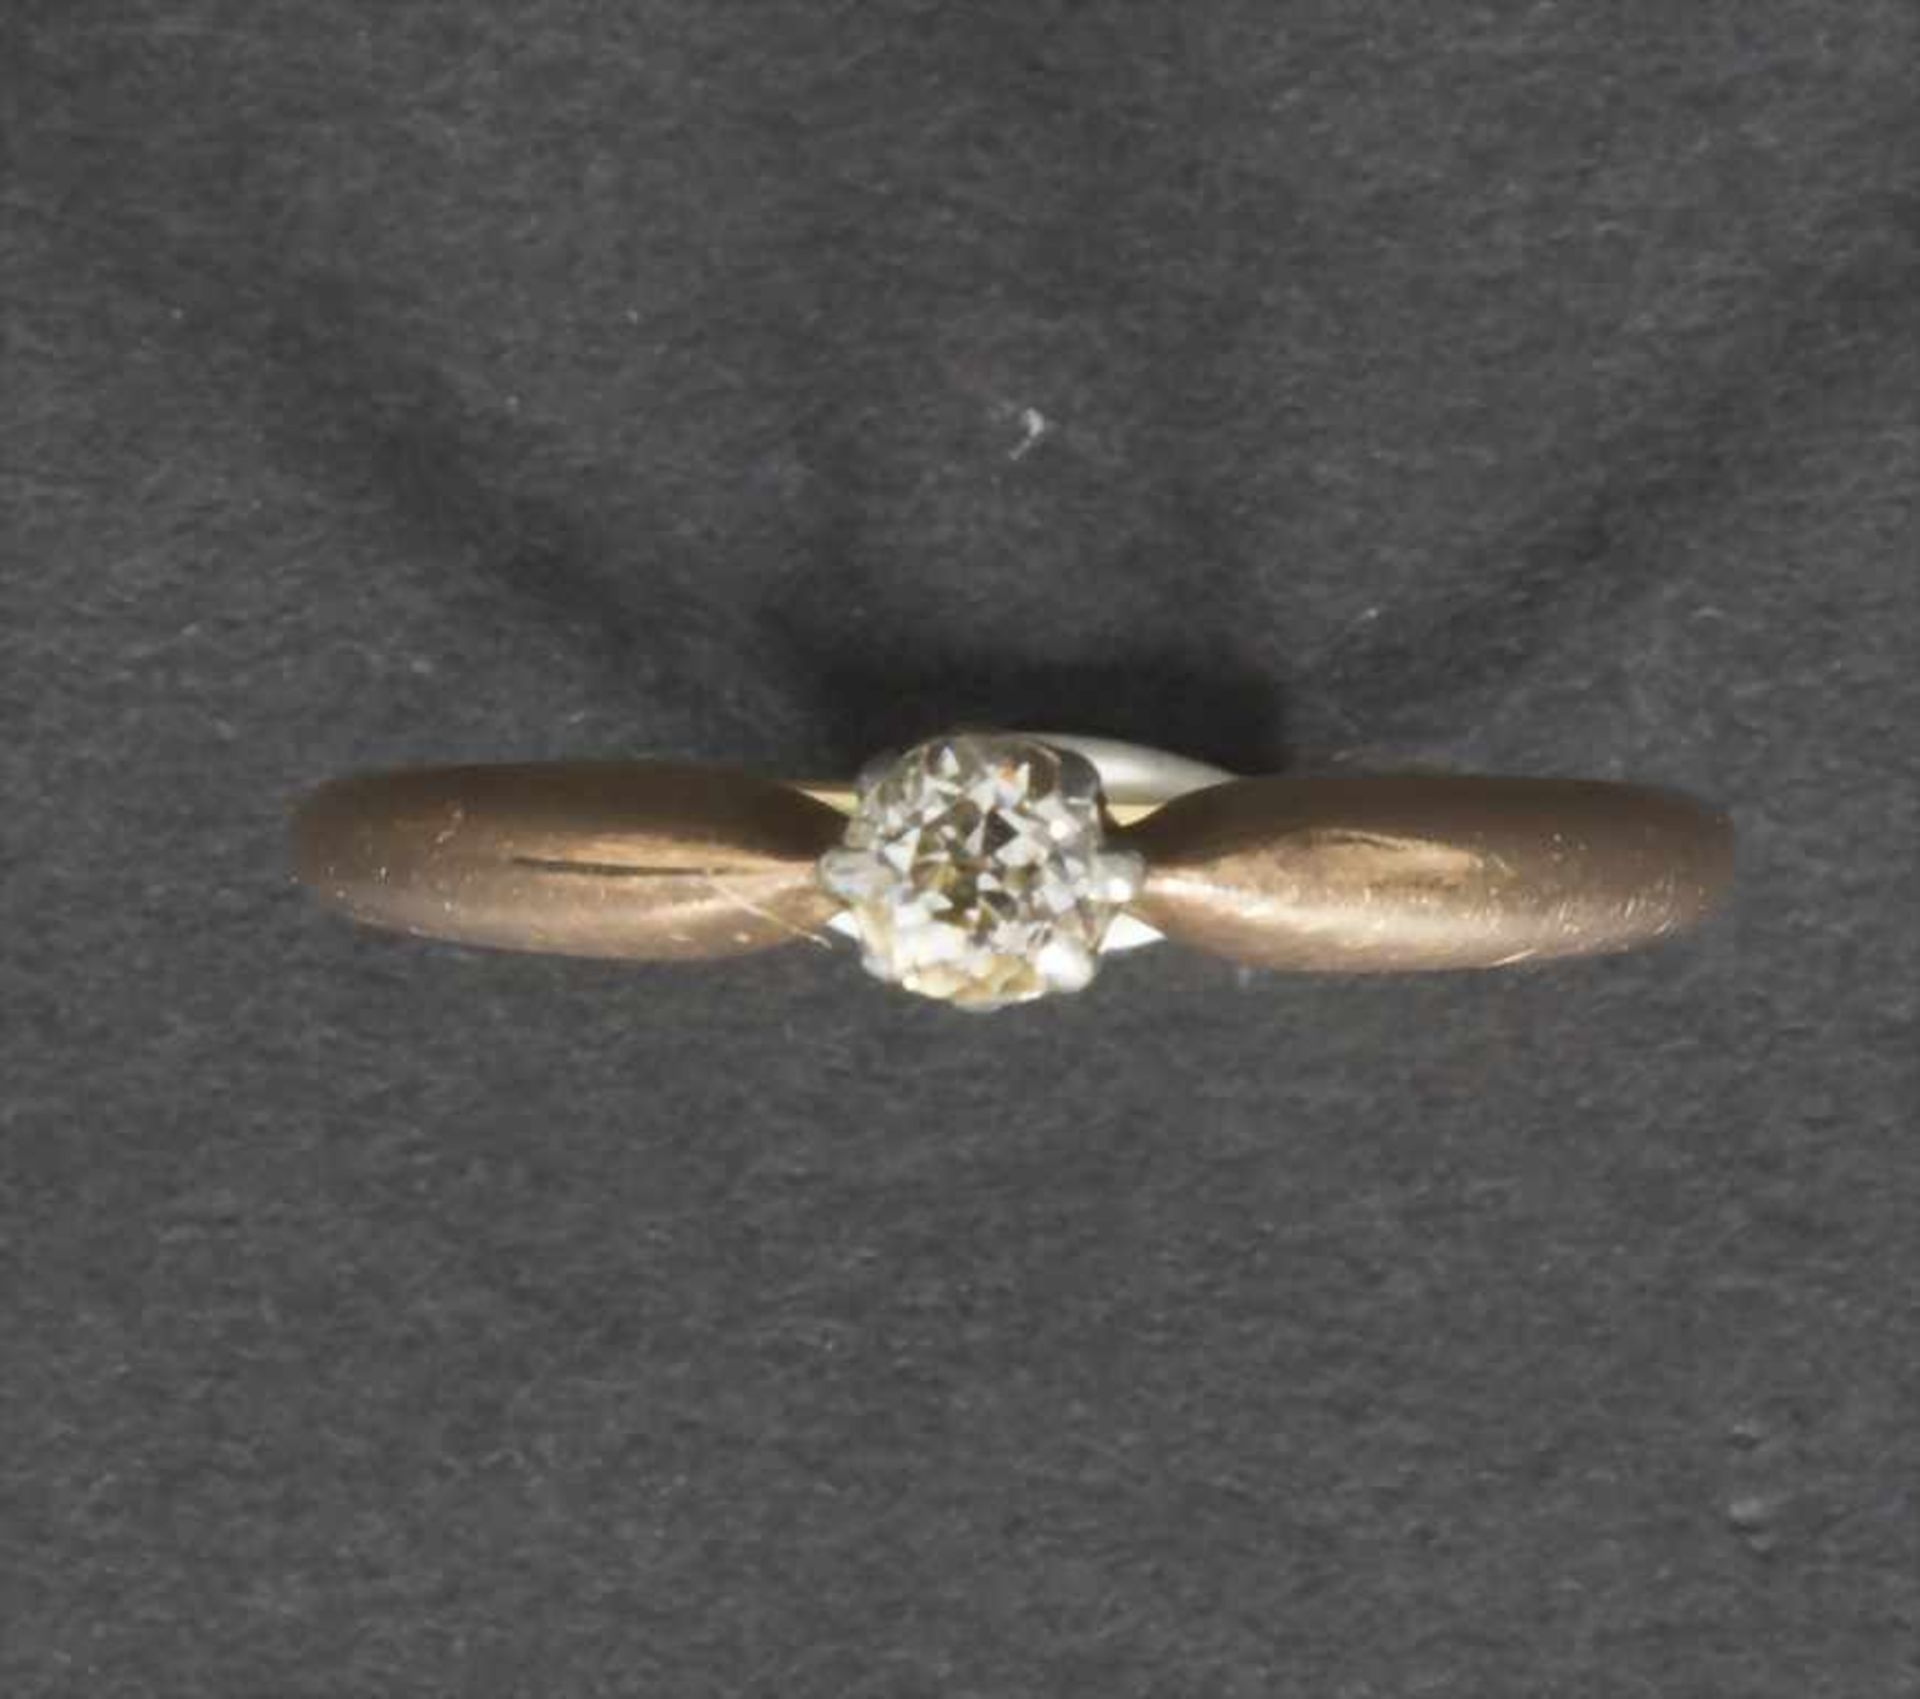 Damenring mit Diamant / A ladies ring with diamondMaterial: GG 585/000, Diamant,Ringgröße: 56,